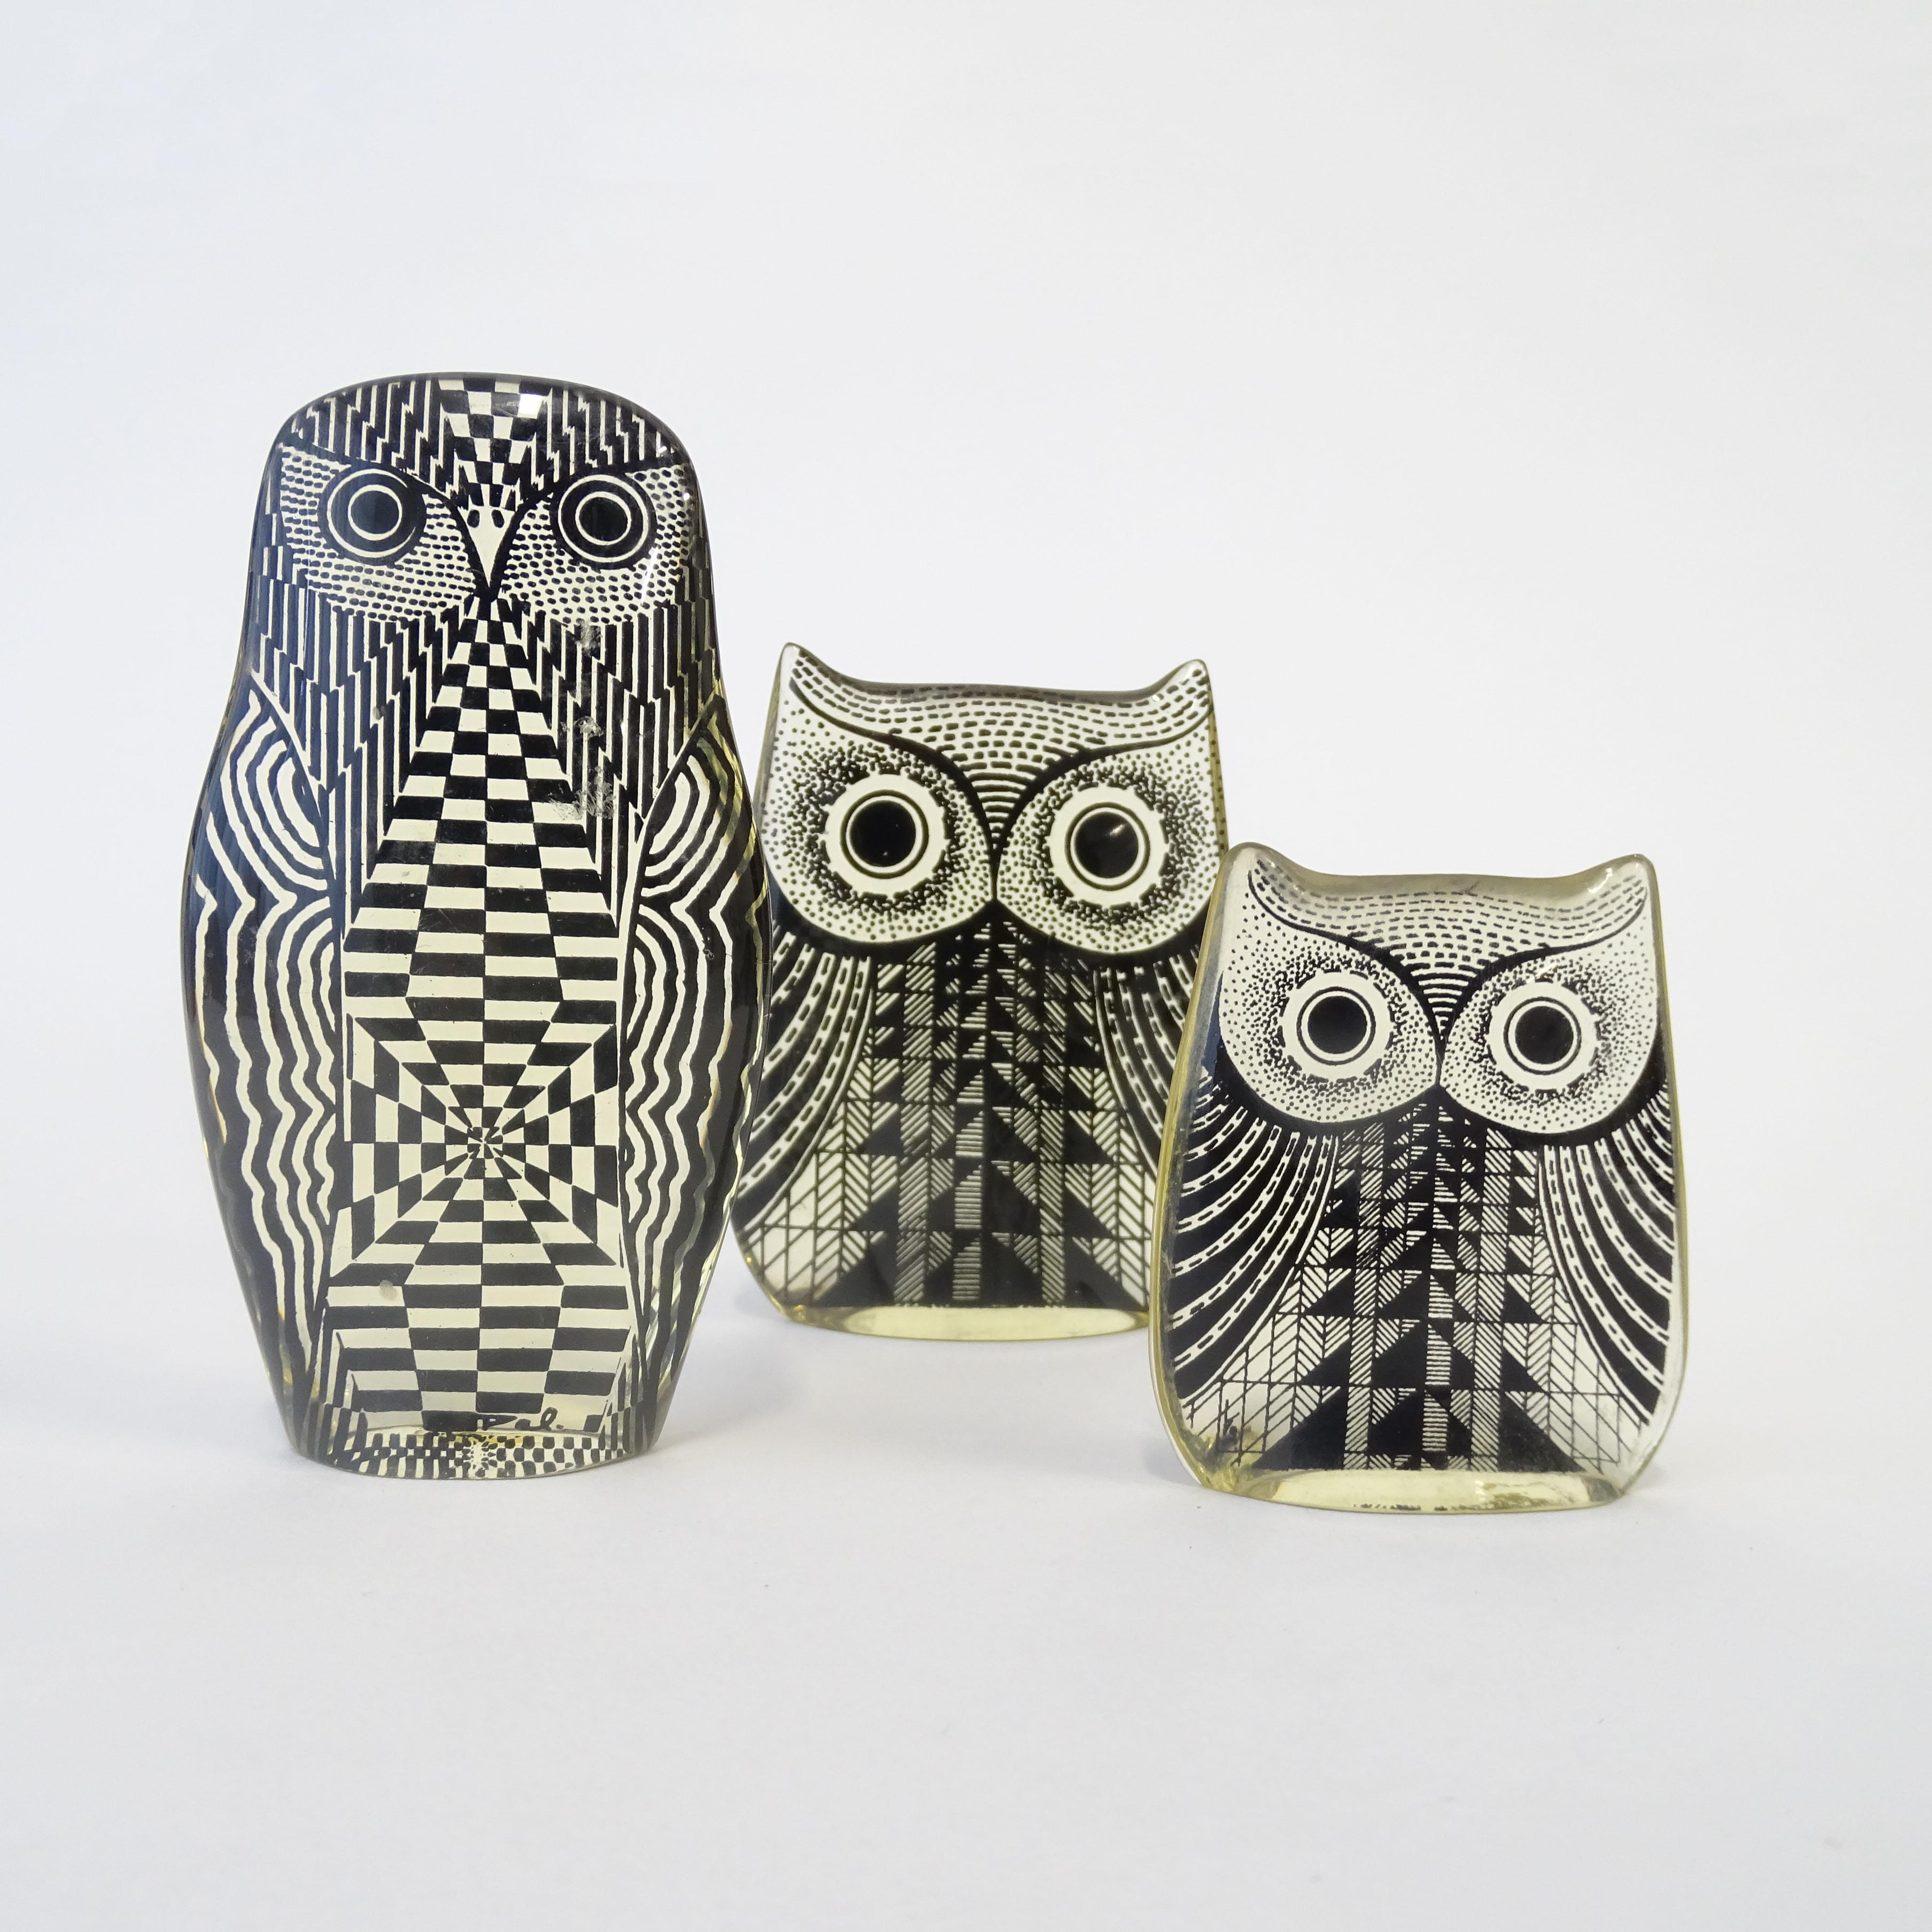 Abraham Palatnik set of three Op Art lucite owls, Brazil 1970s
Original label